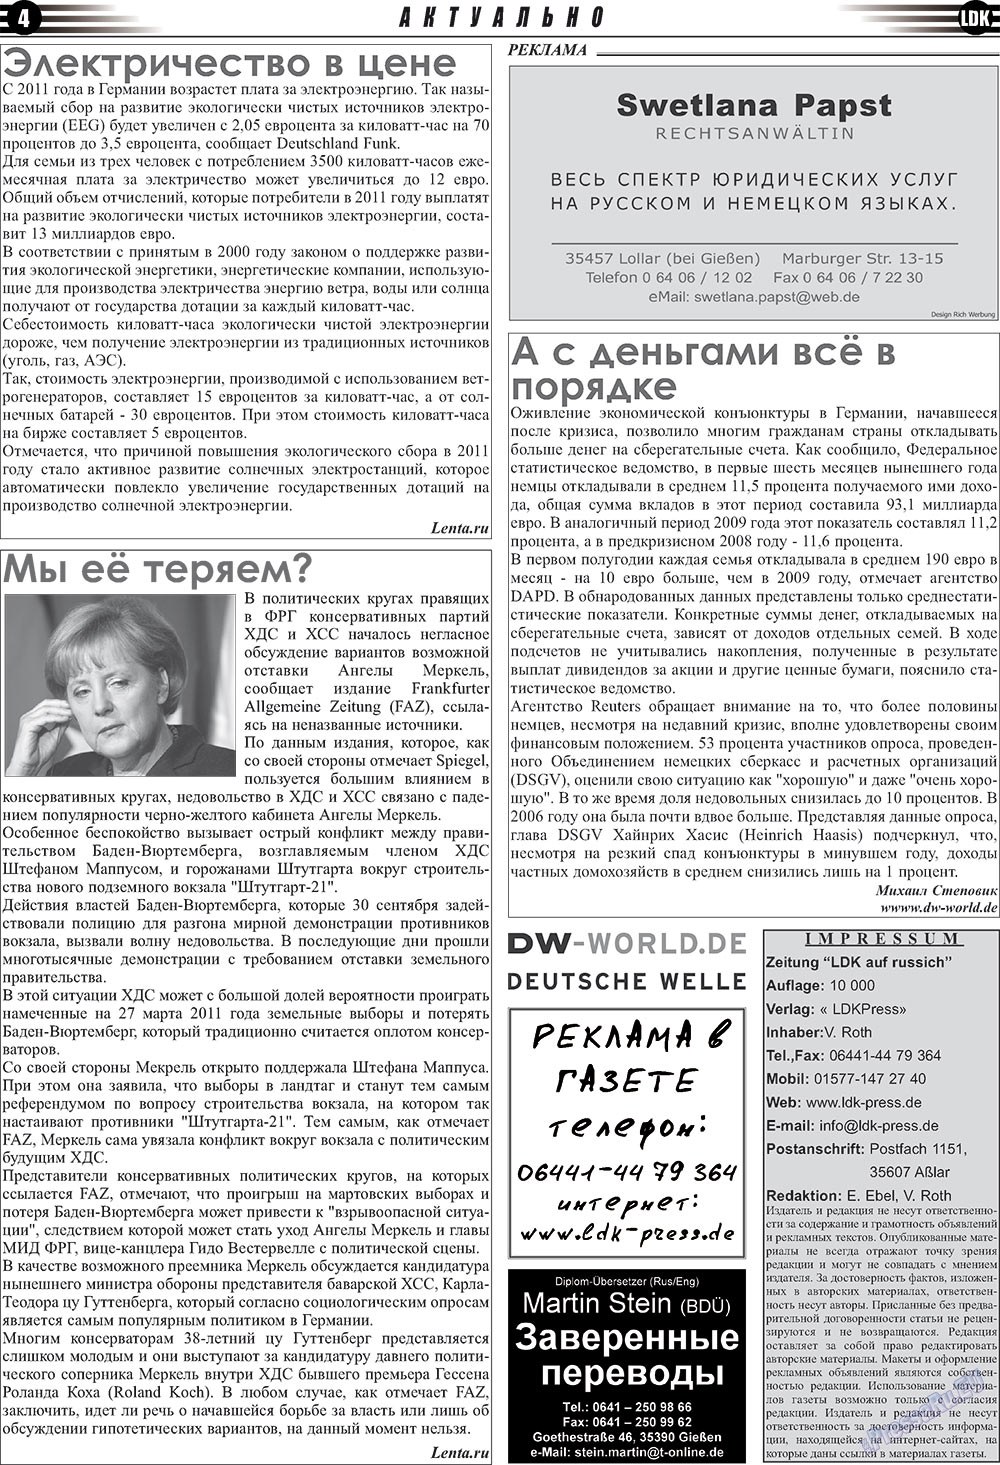 LDK по-русски, газета. 2010 №11 стр.4